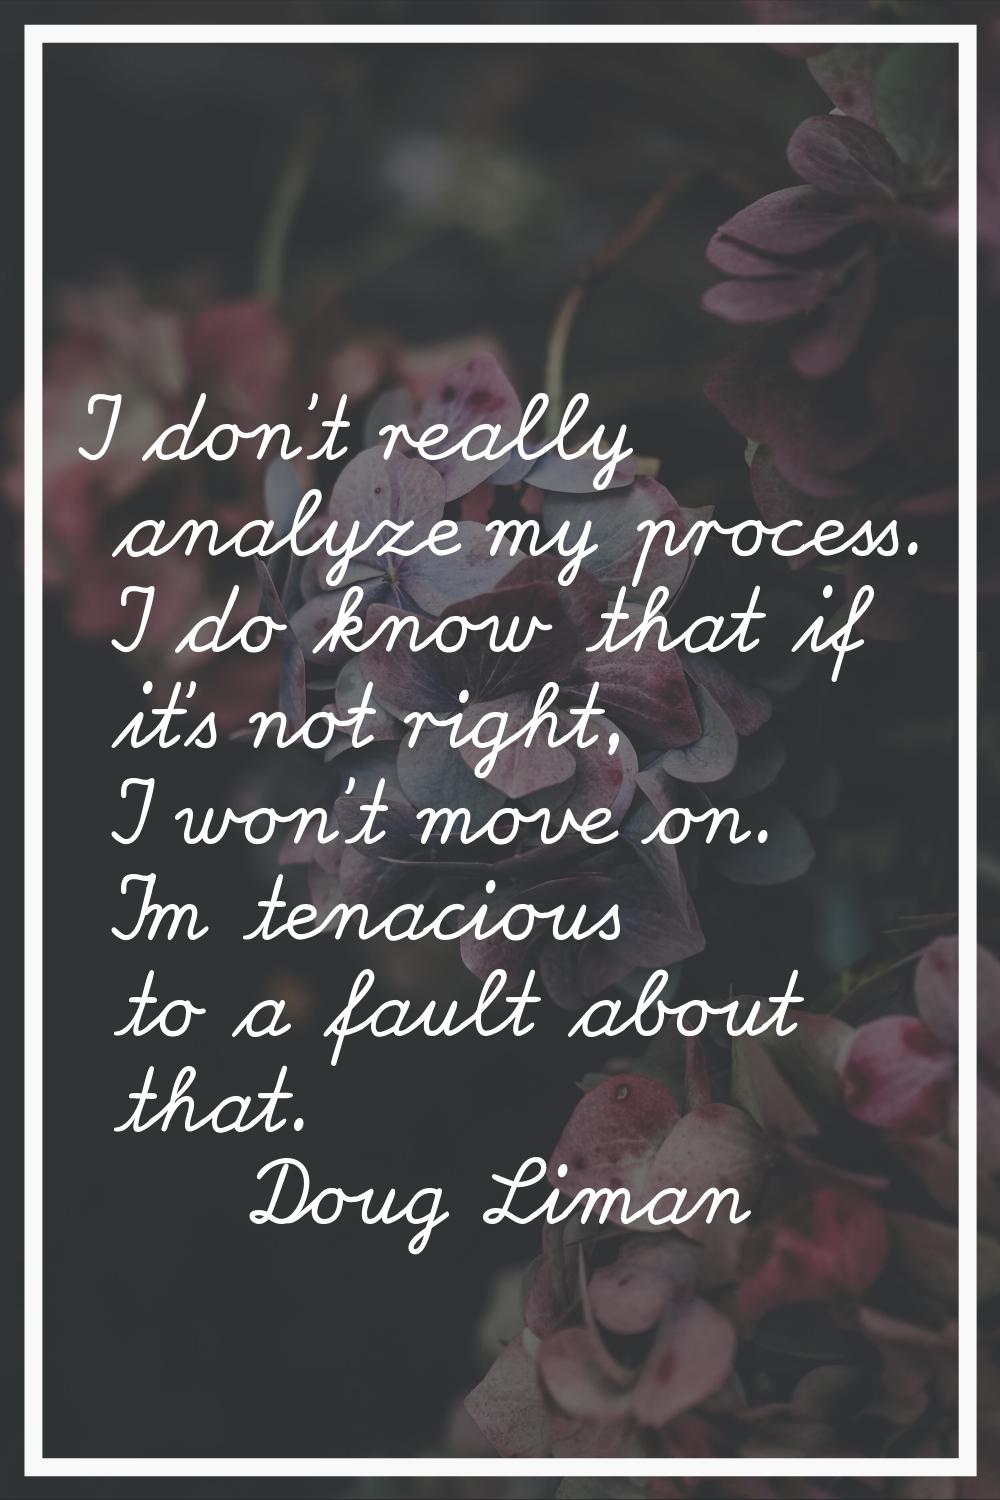 I don't really analyze my process. I do know that if it's not right, I won't move on. I'm tenacious